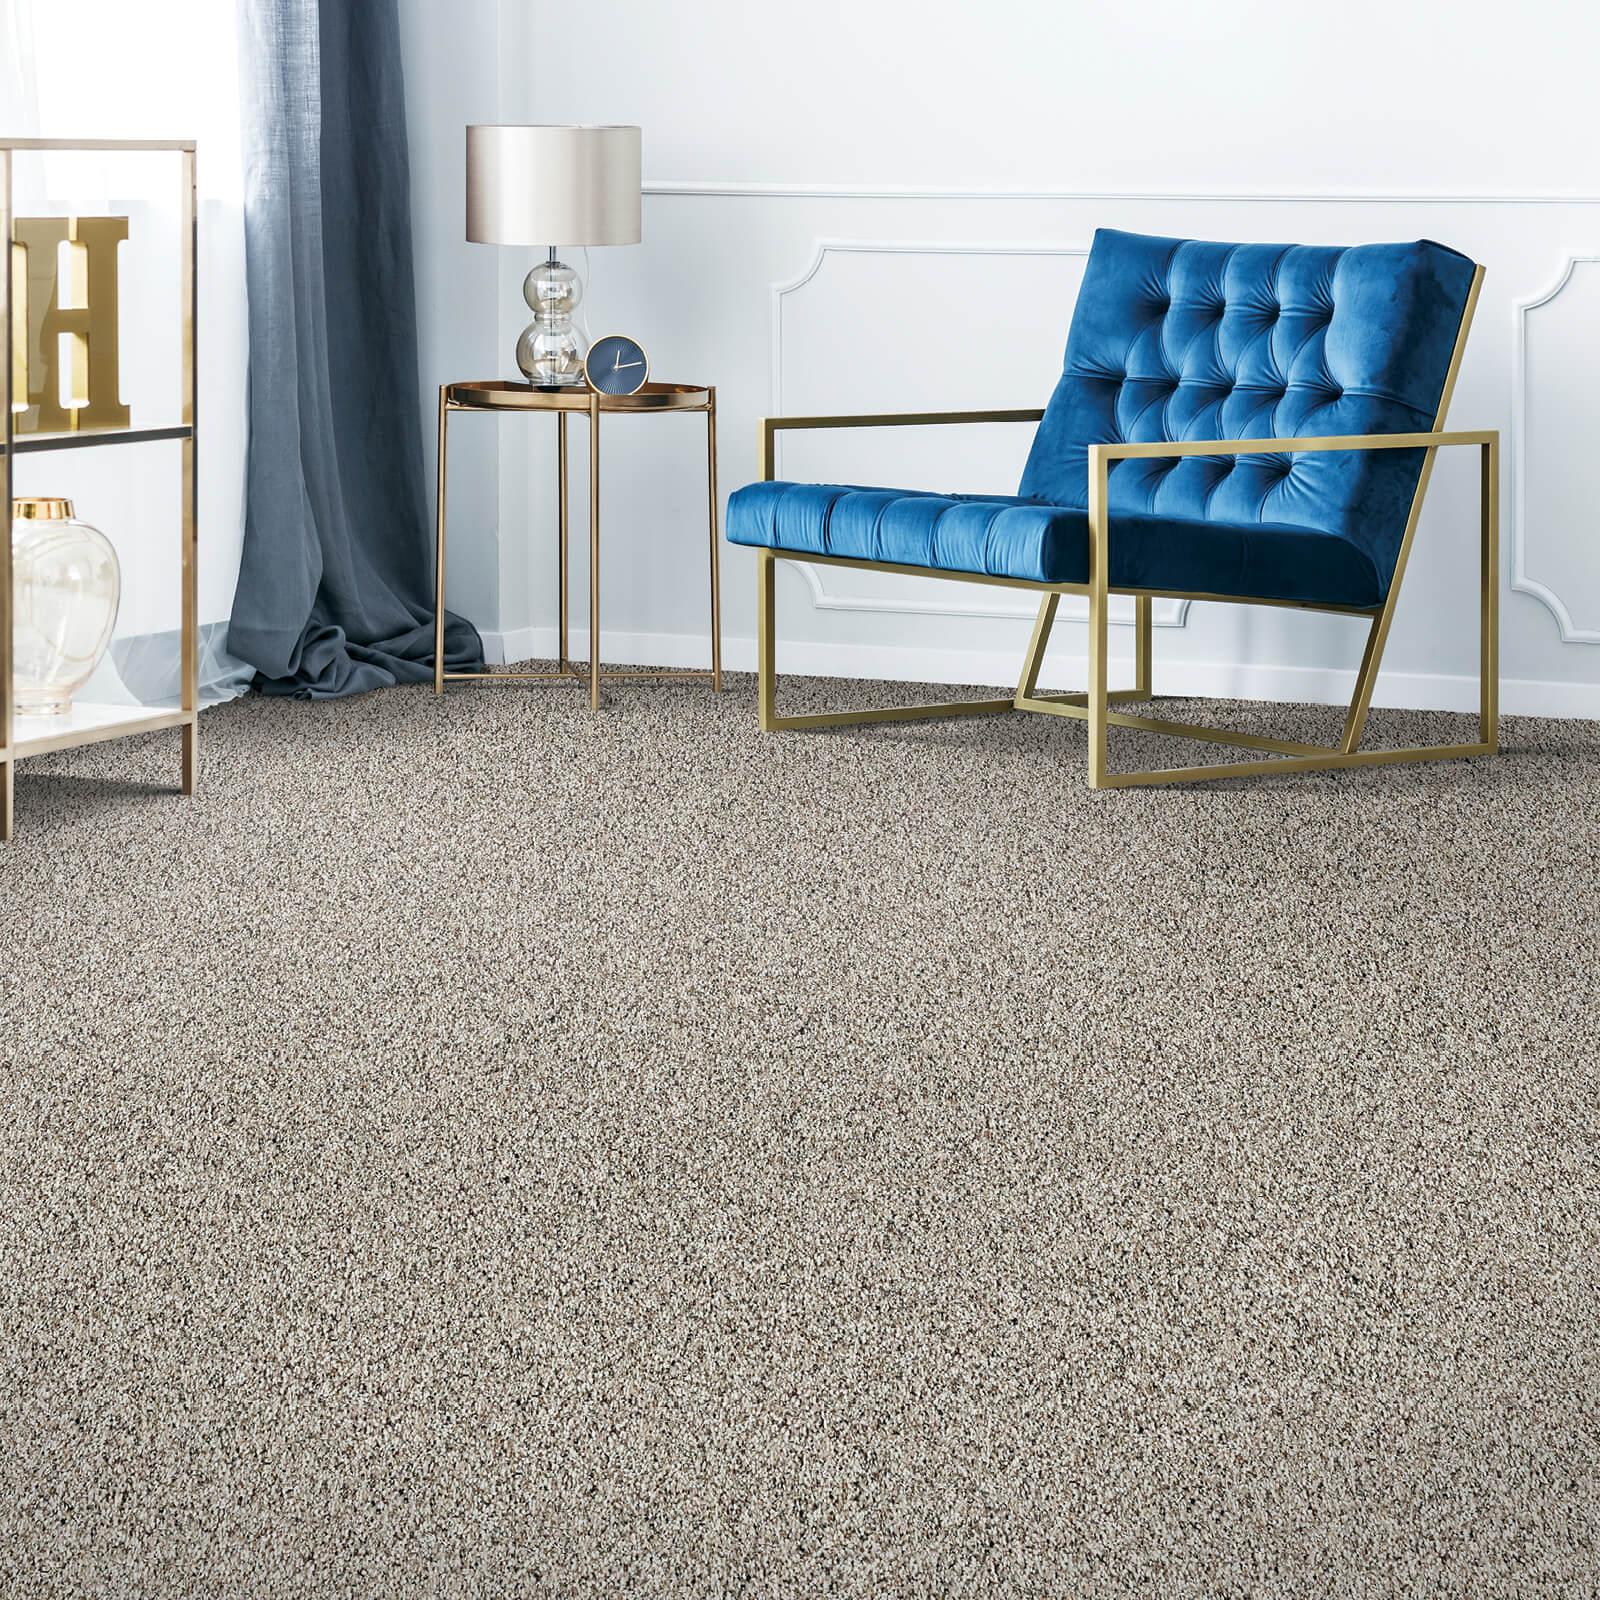 Carpet for Allergies | Flooring Direct